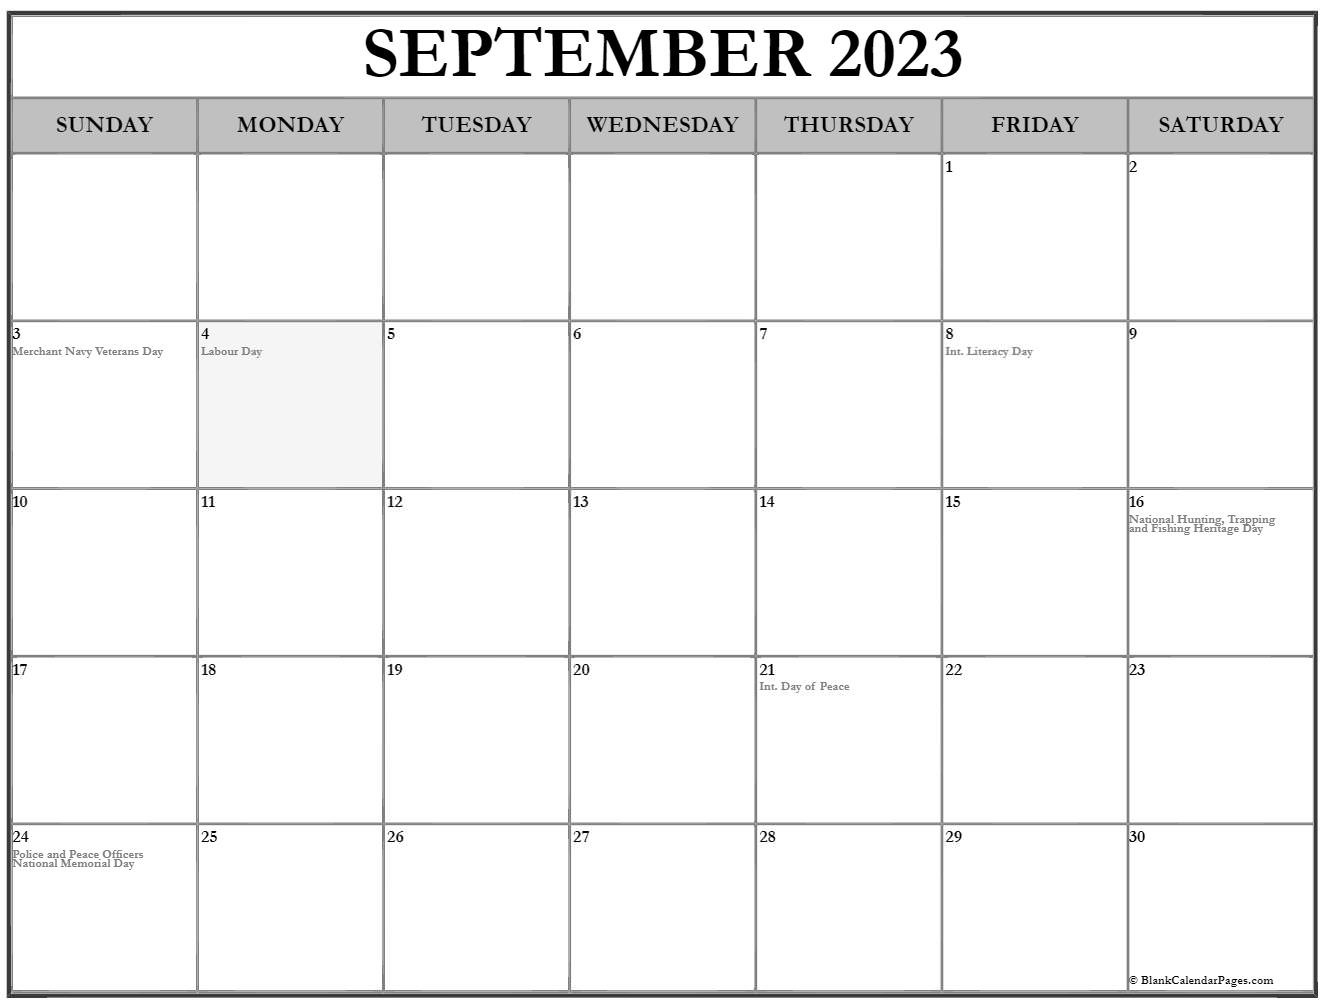 2023-canada-calendar-with-holidays-2023-canada-calendar-with-holidays